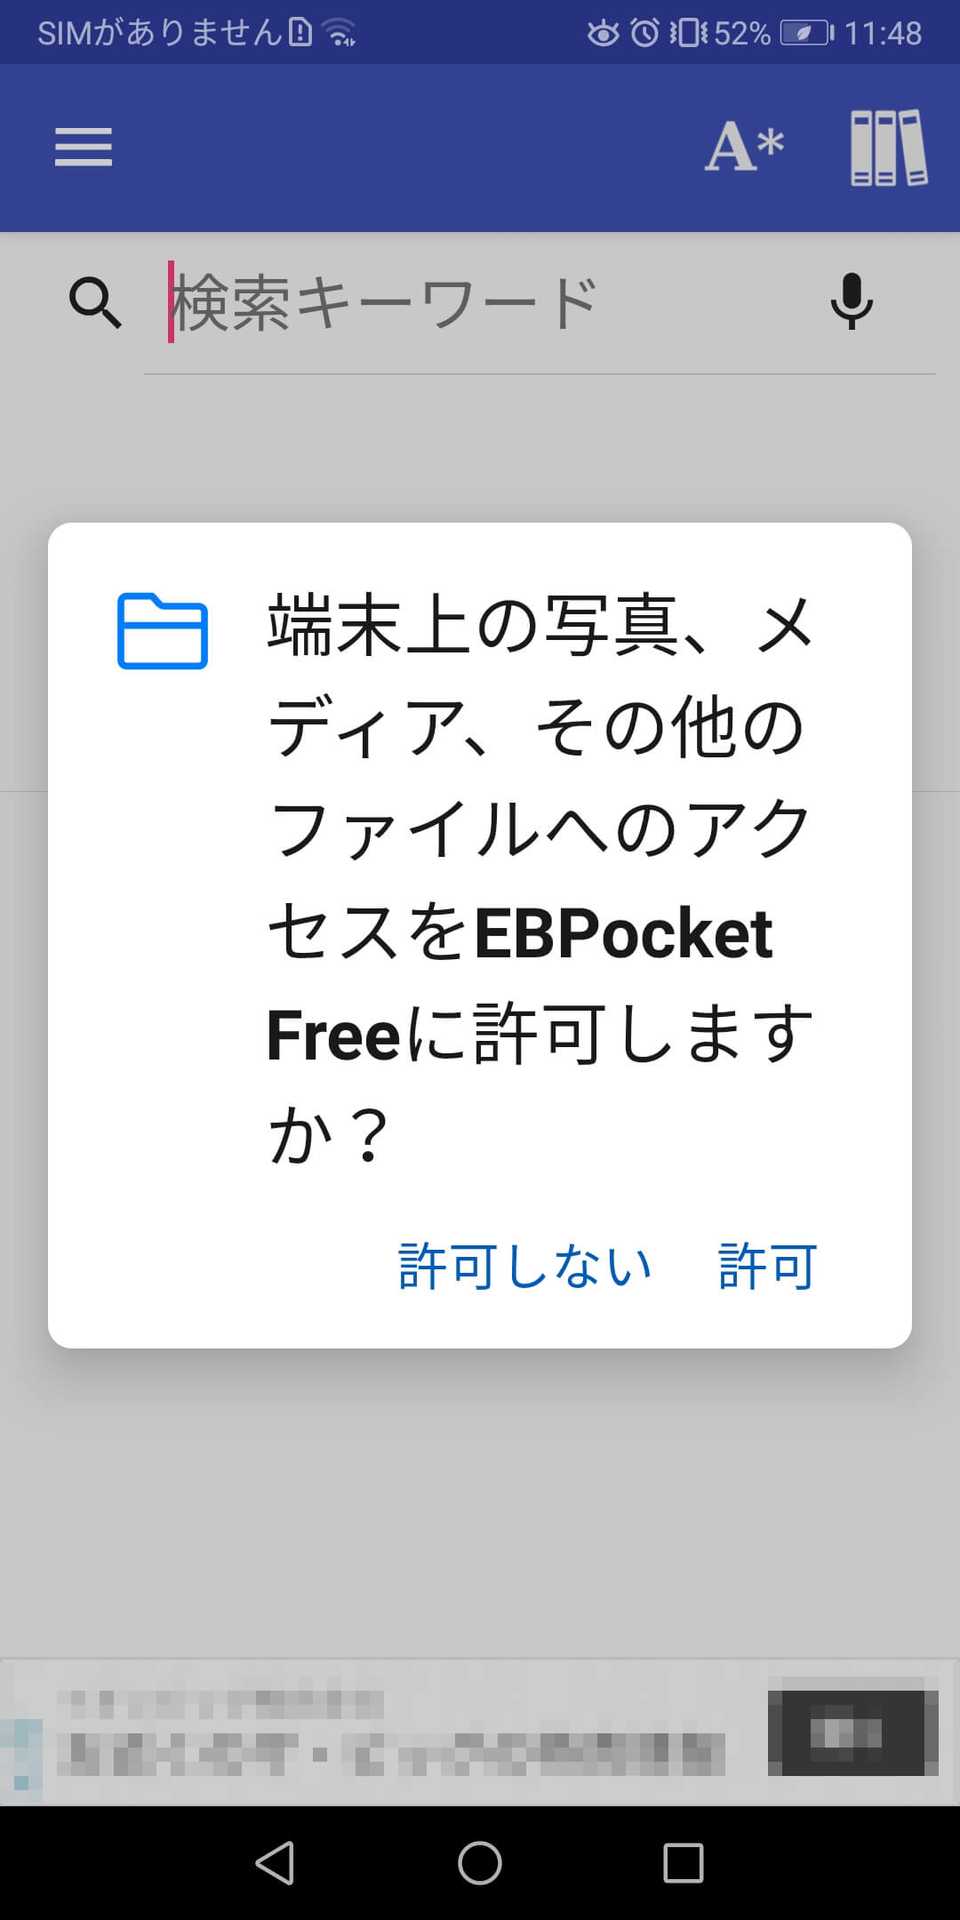 EBPocket Free